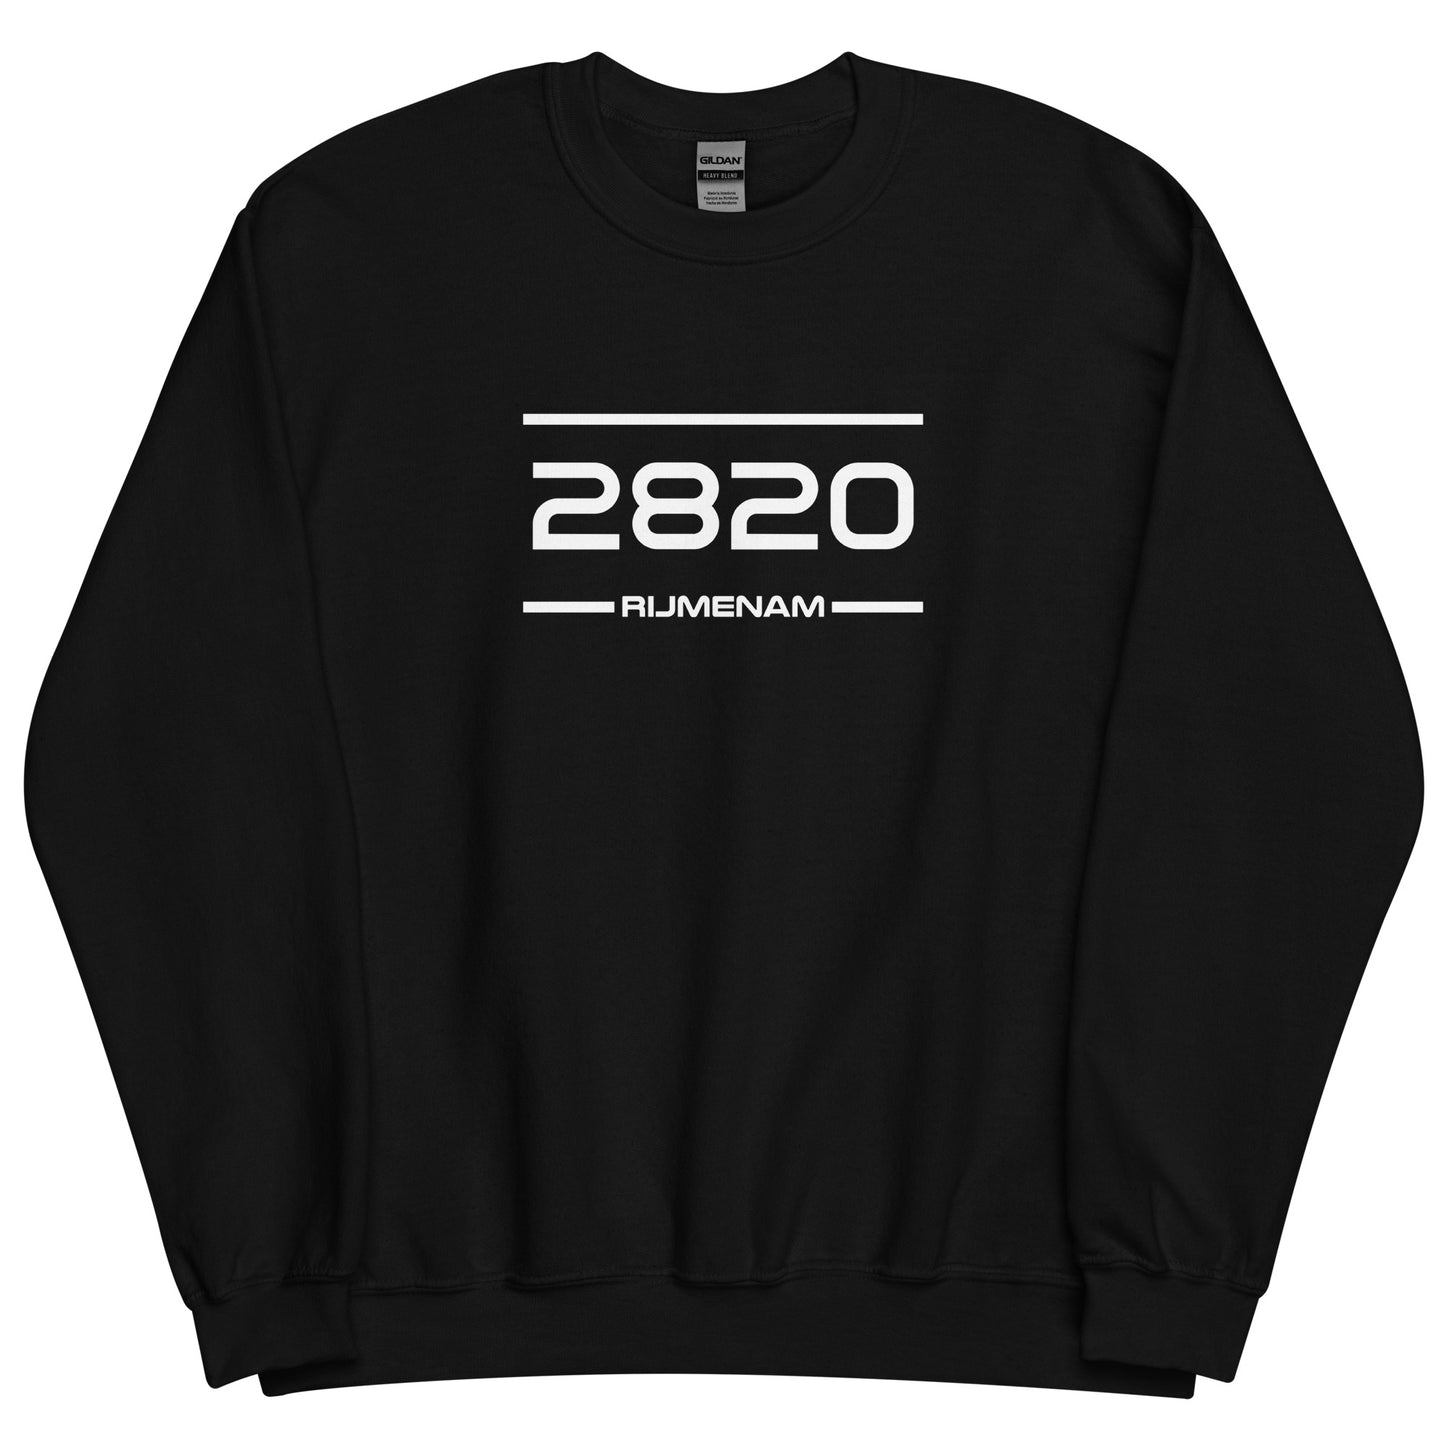 Sweater - 2820 - Rijmenam (M/V)